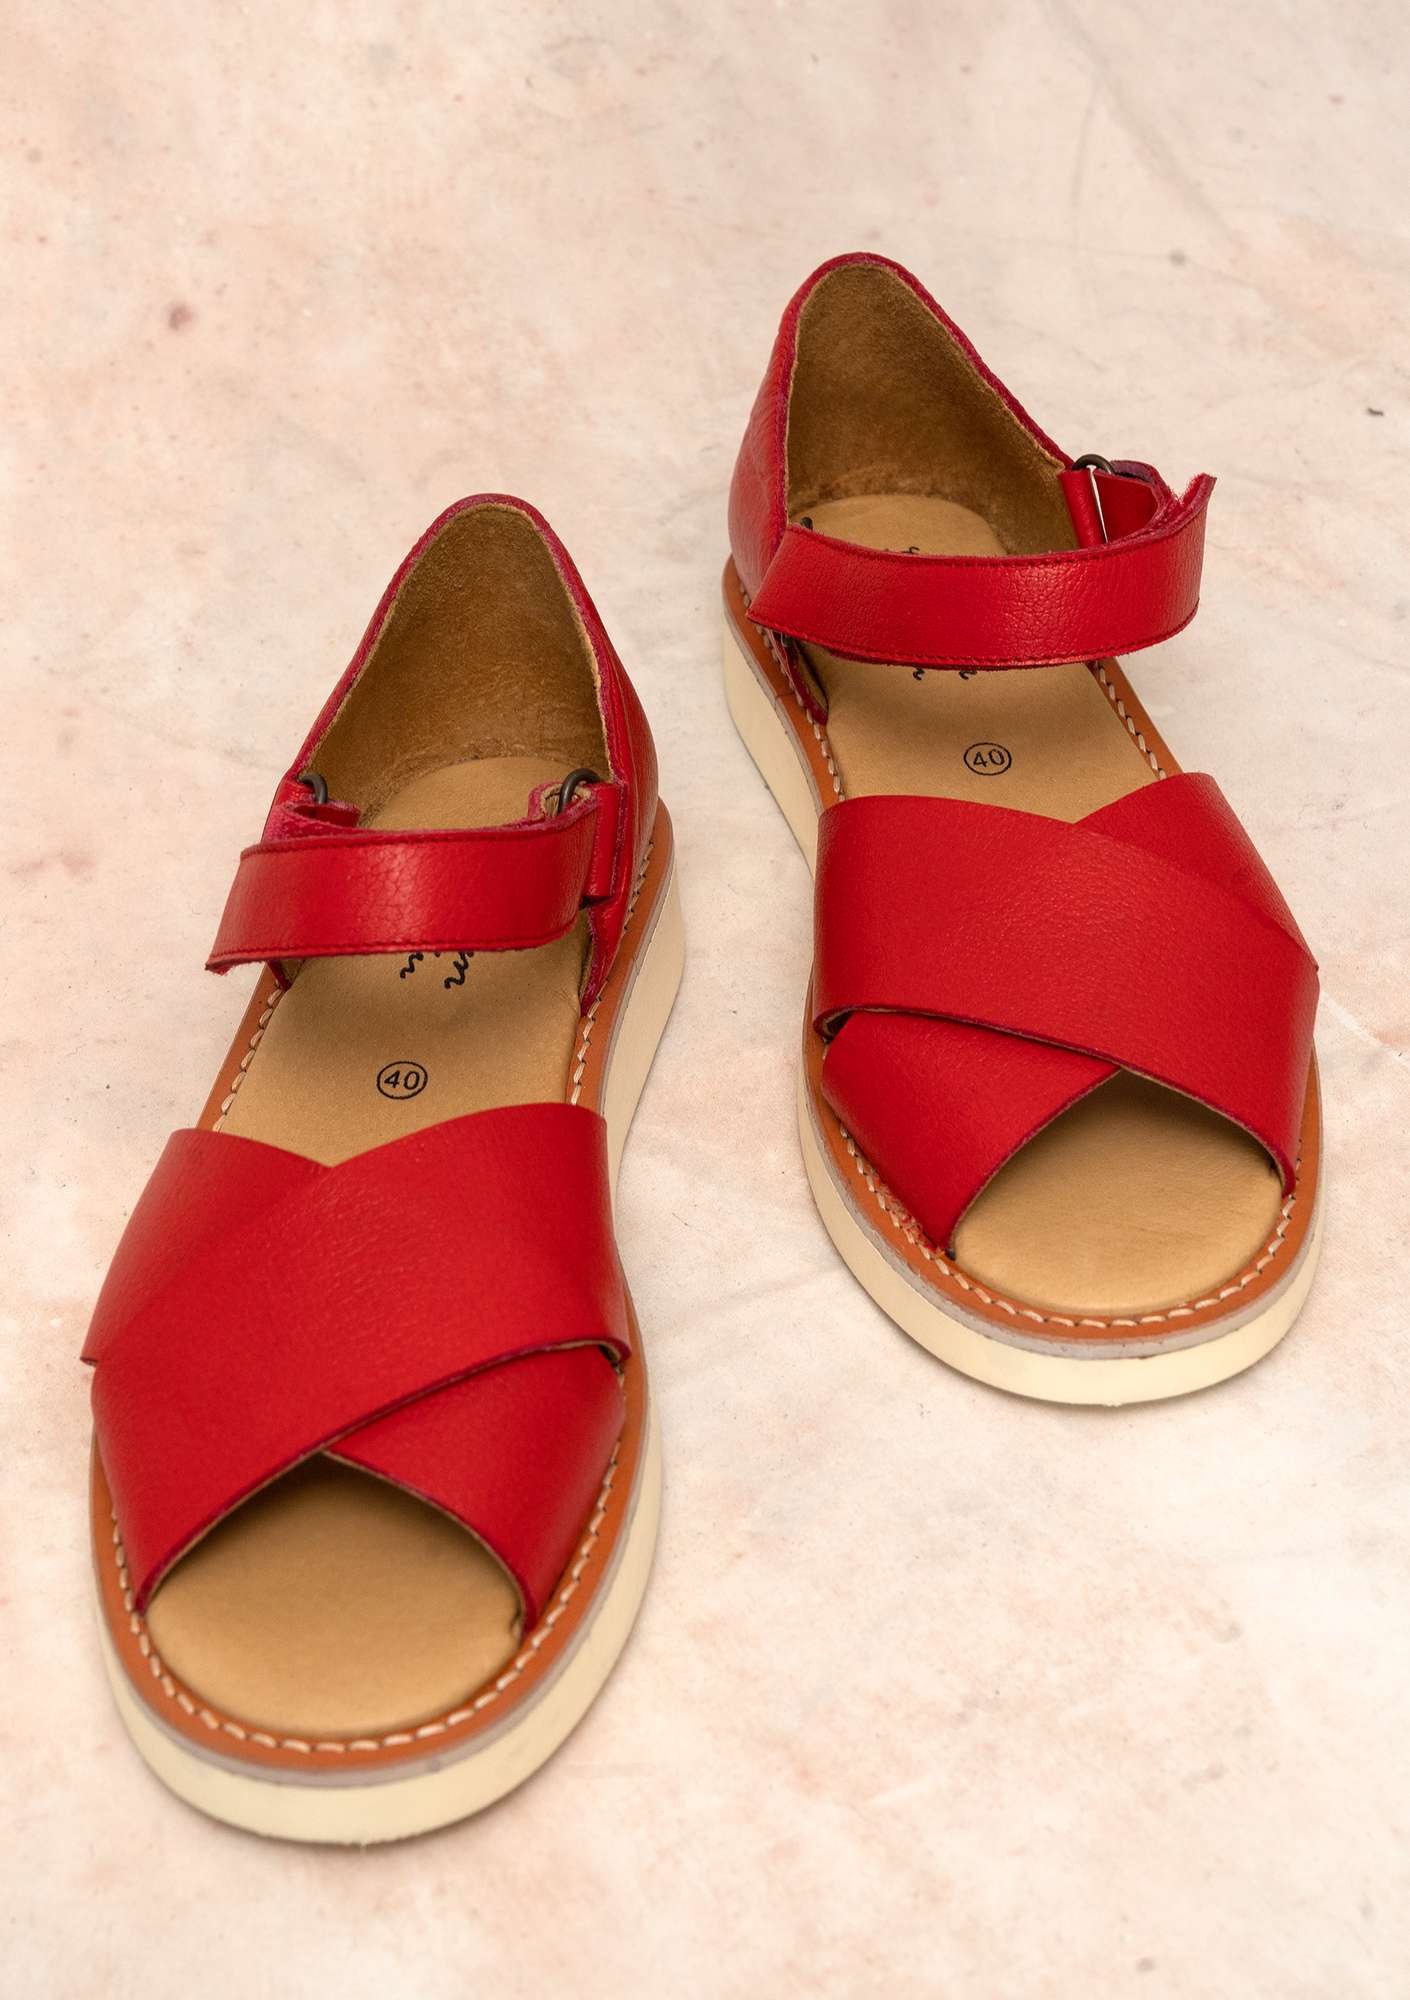 Nappa sandals bright red